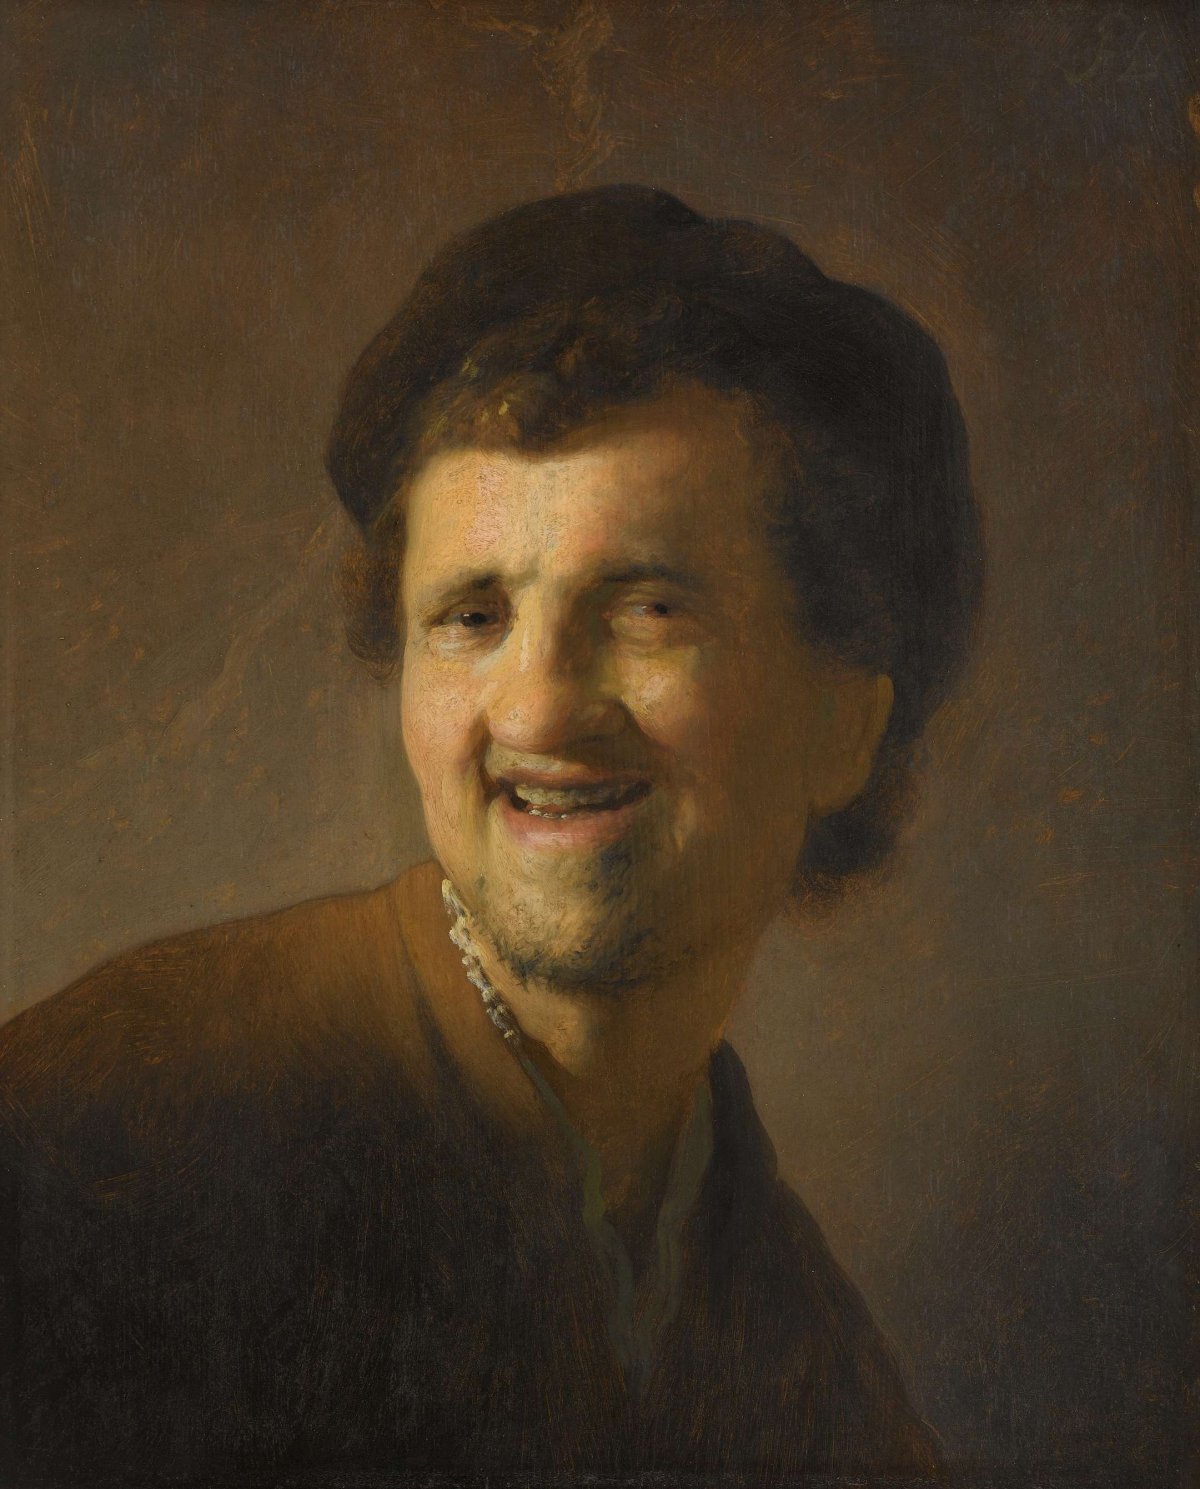 Laughing Young Man, Rembrandt van Rijn, c. 1629 - c. 1630